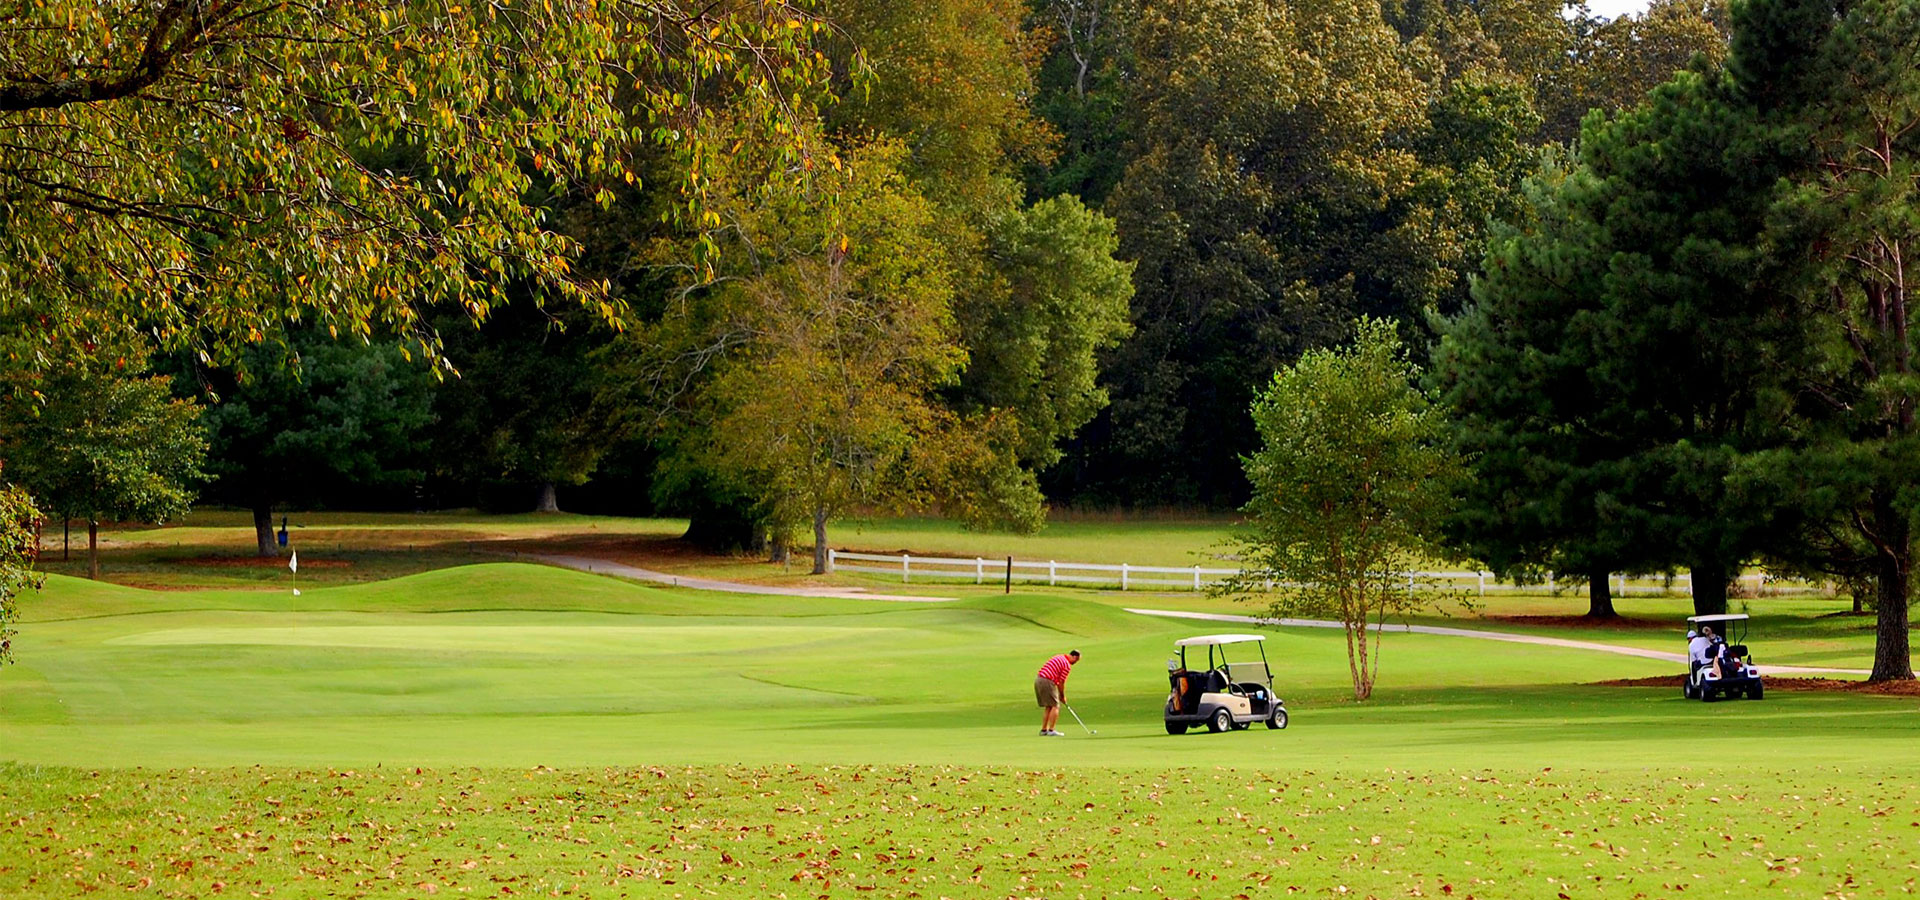 Lakewood Golf & Country Club